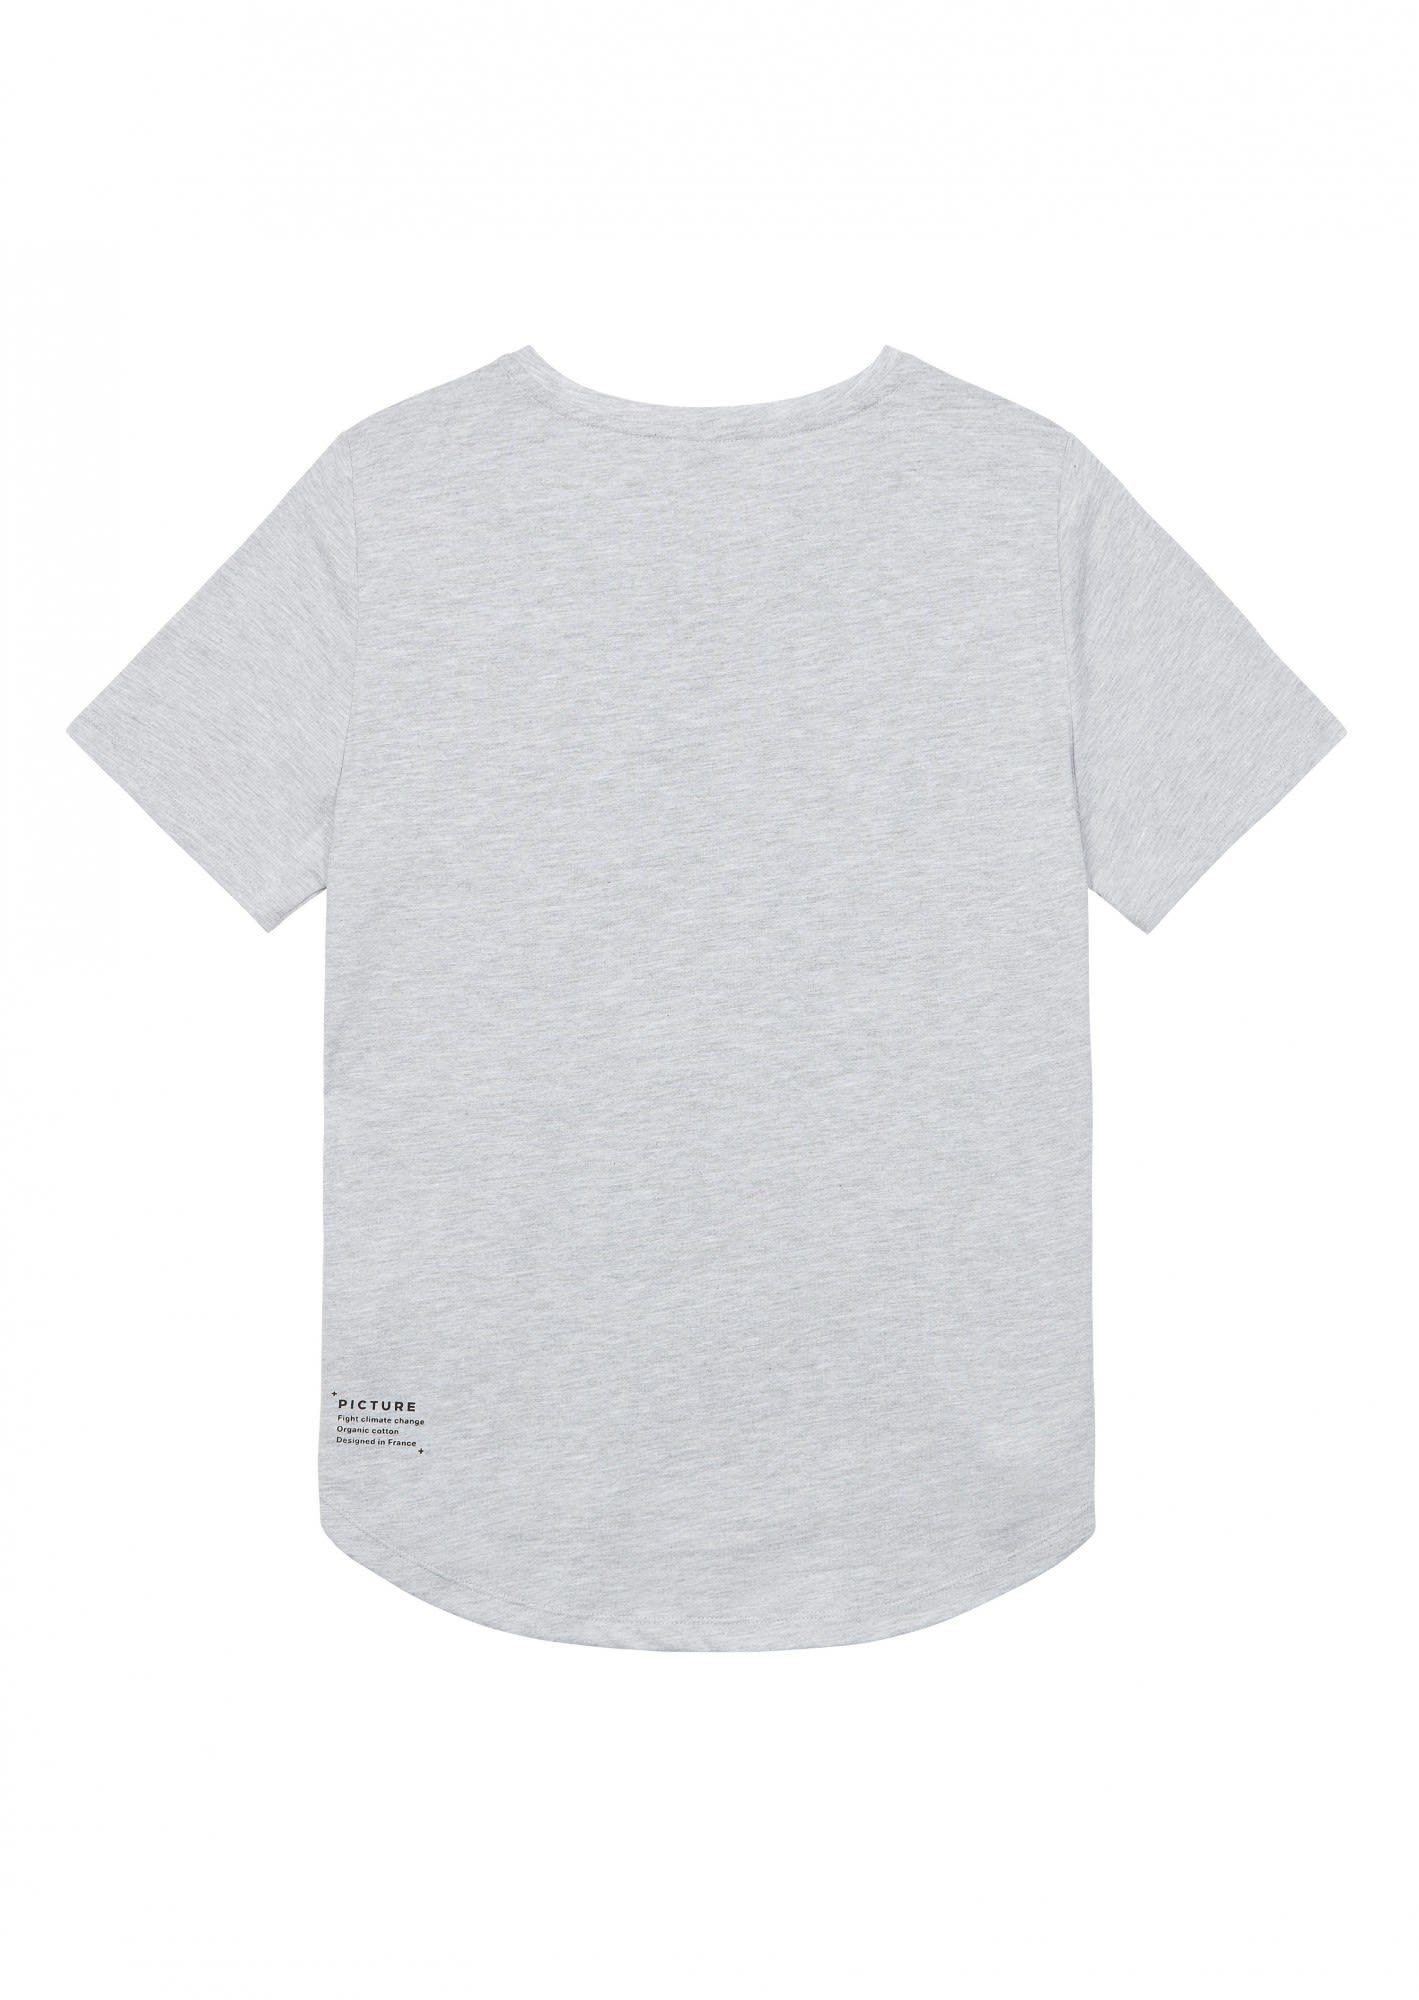 Picture Tee T-Shirt Regular Kurzarm-Shirt Fall Melange Grey Picture Damen W